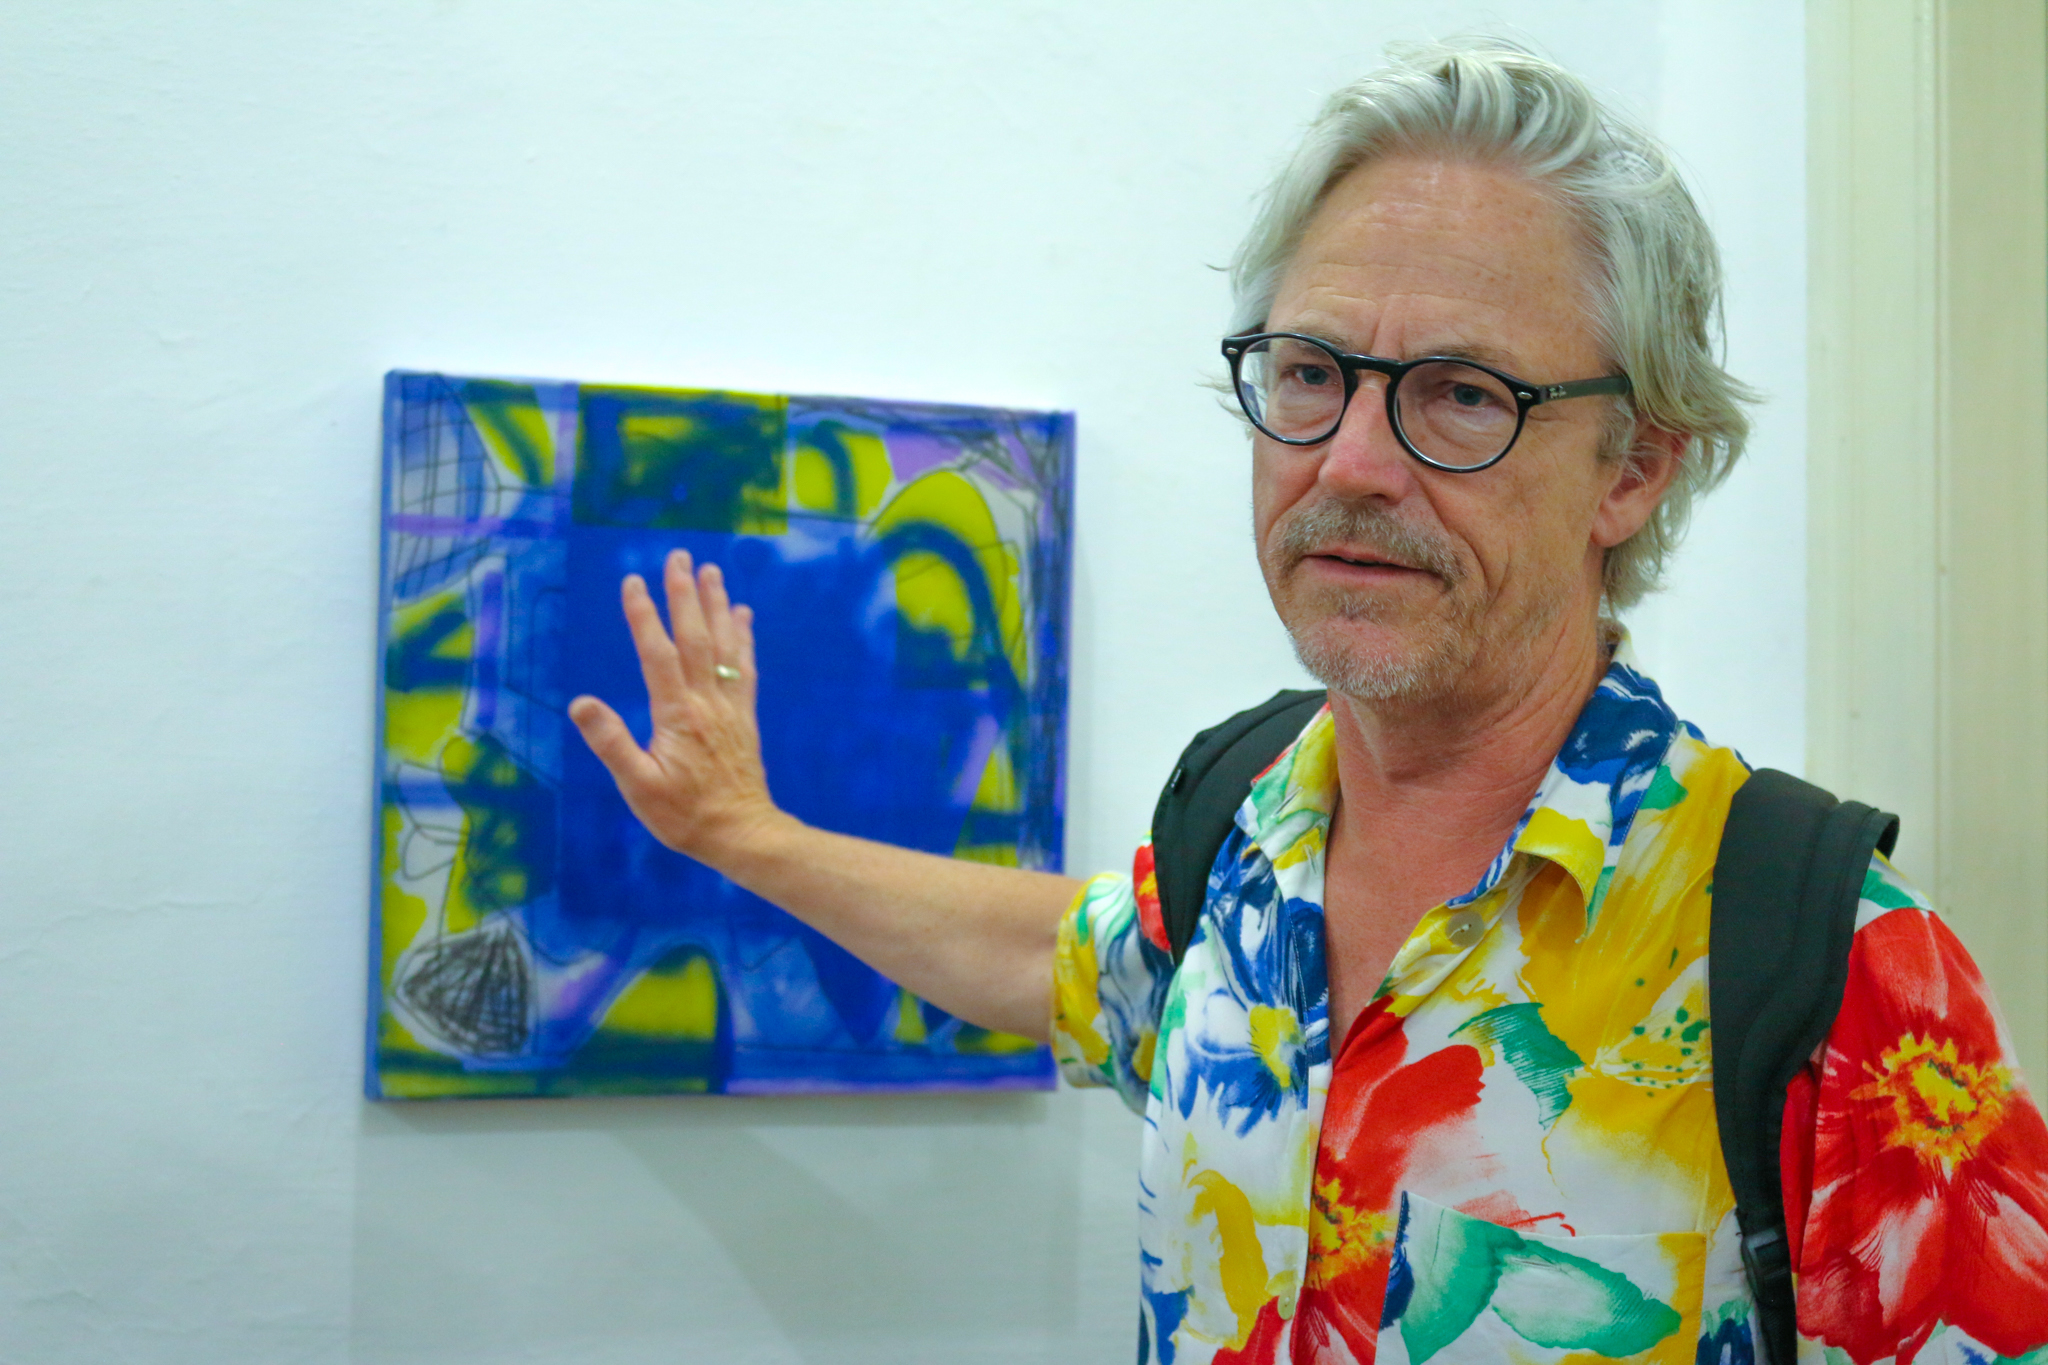 Artist David Sutherland with his art work